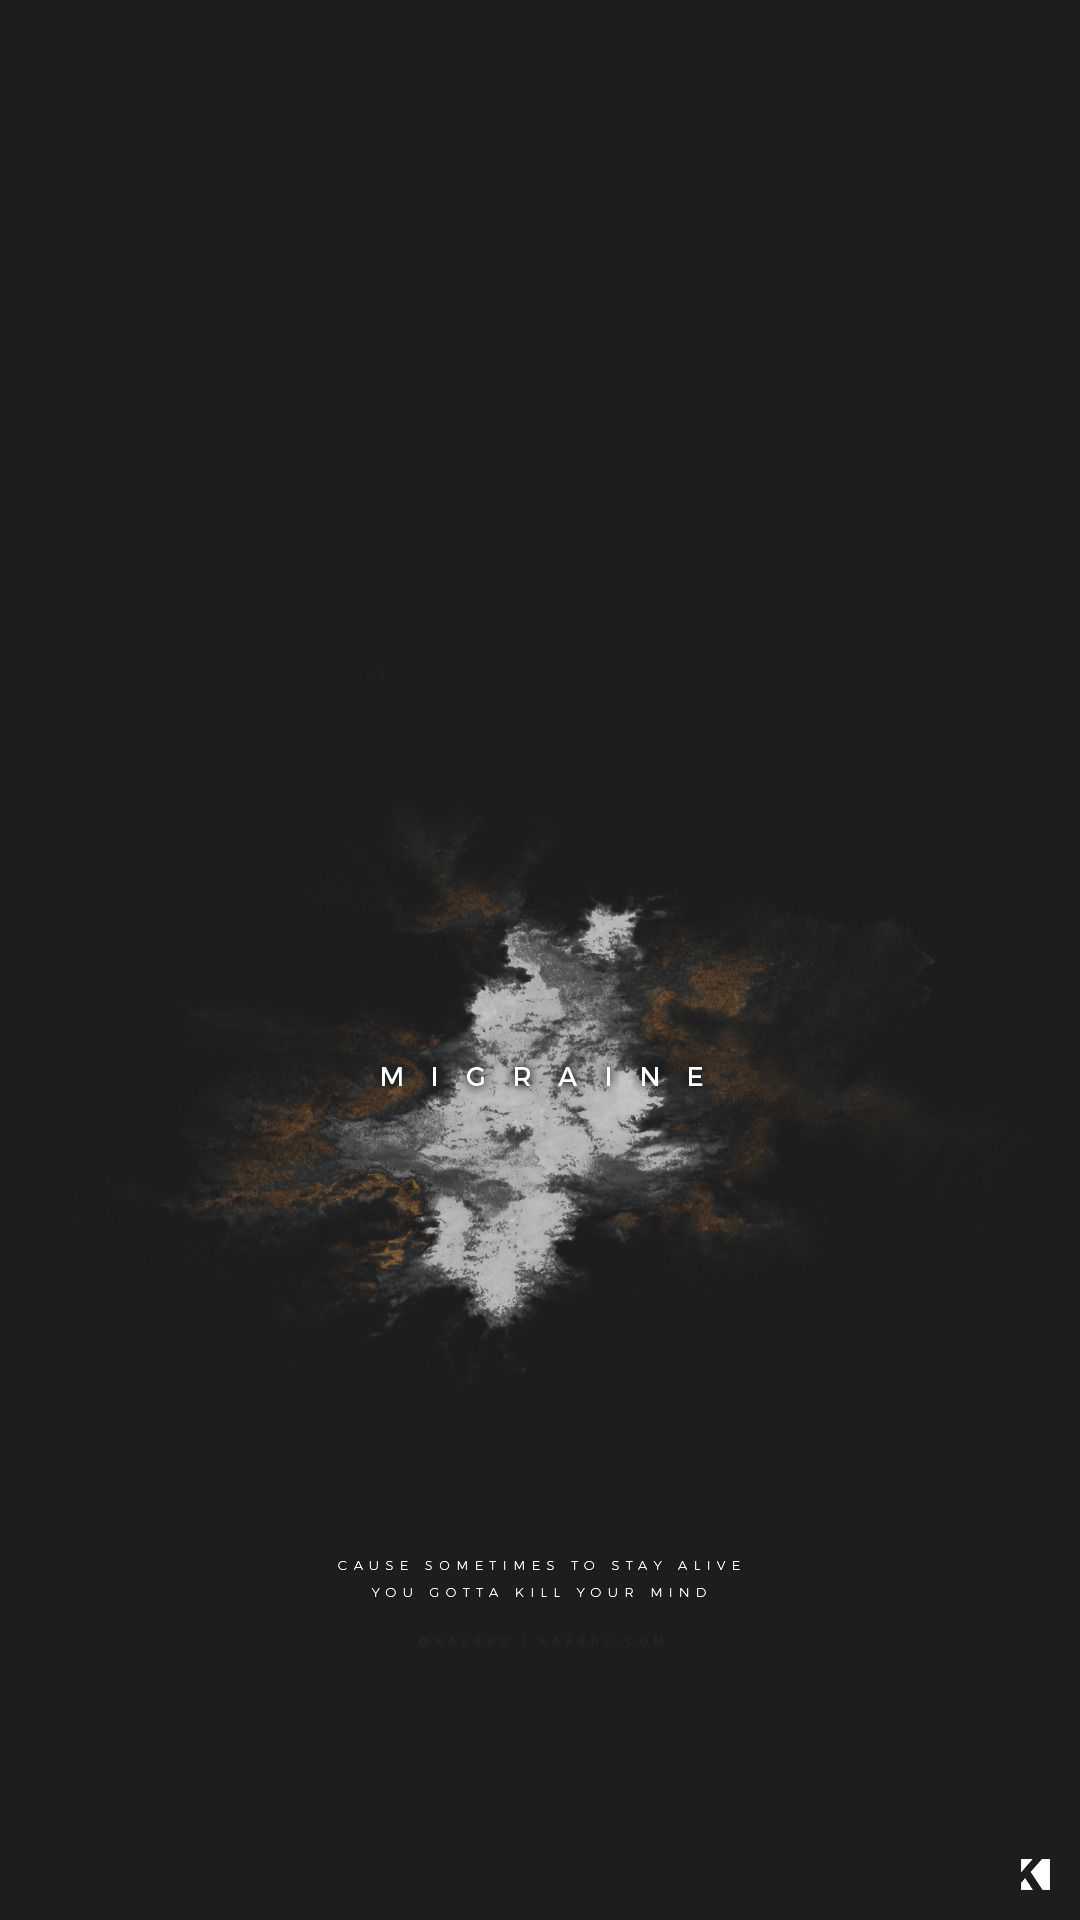 The dark clouds poster - Dark phone, gothic, black quotes, depressing, dark, depression, dark vaporwave, phone, black phone, black, iPhone